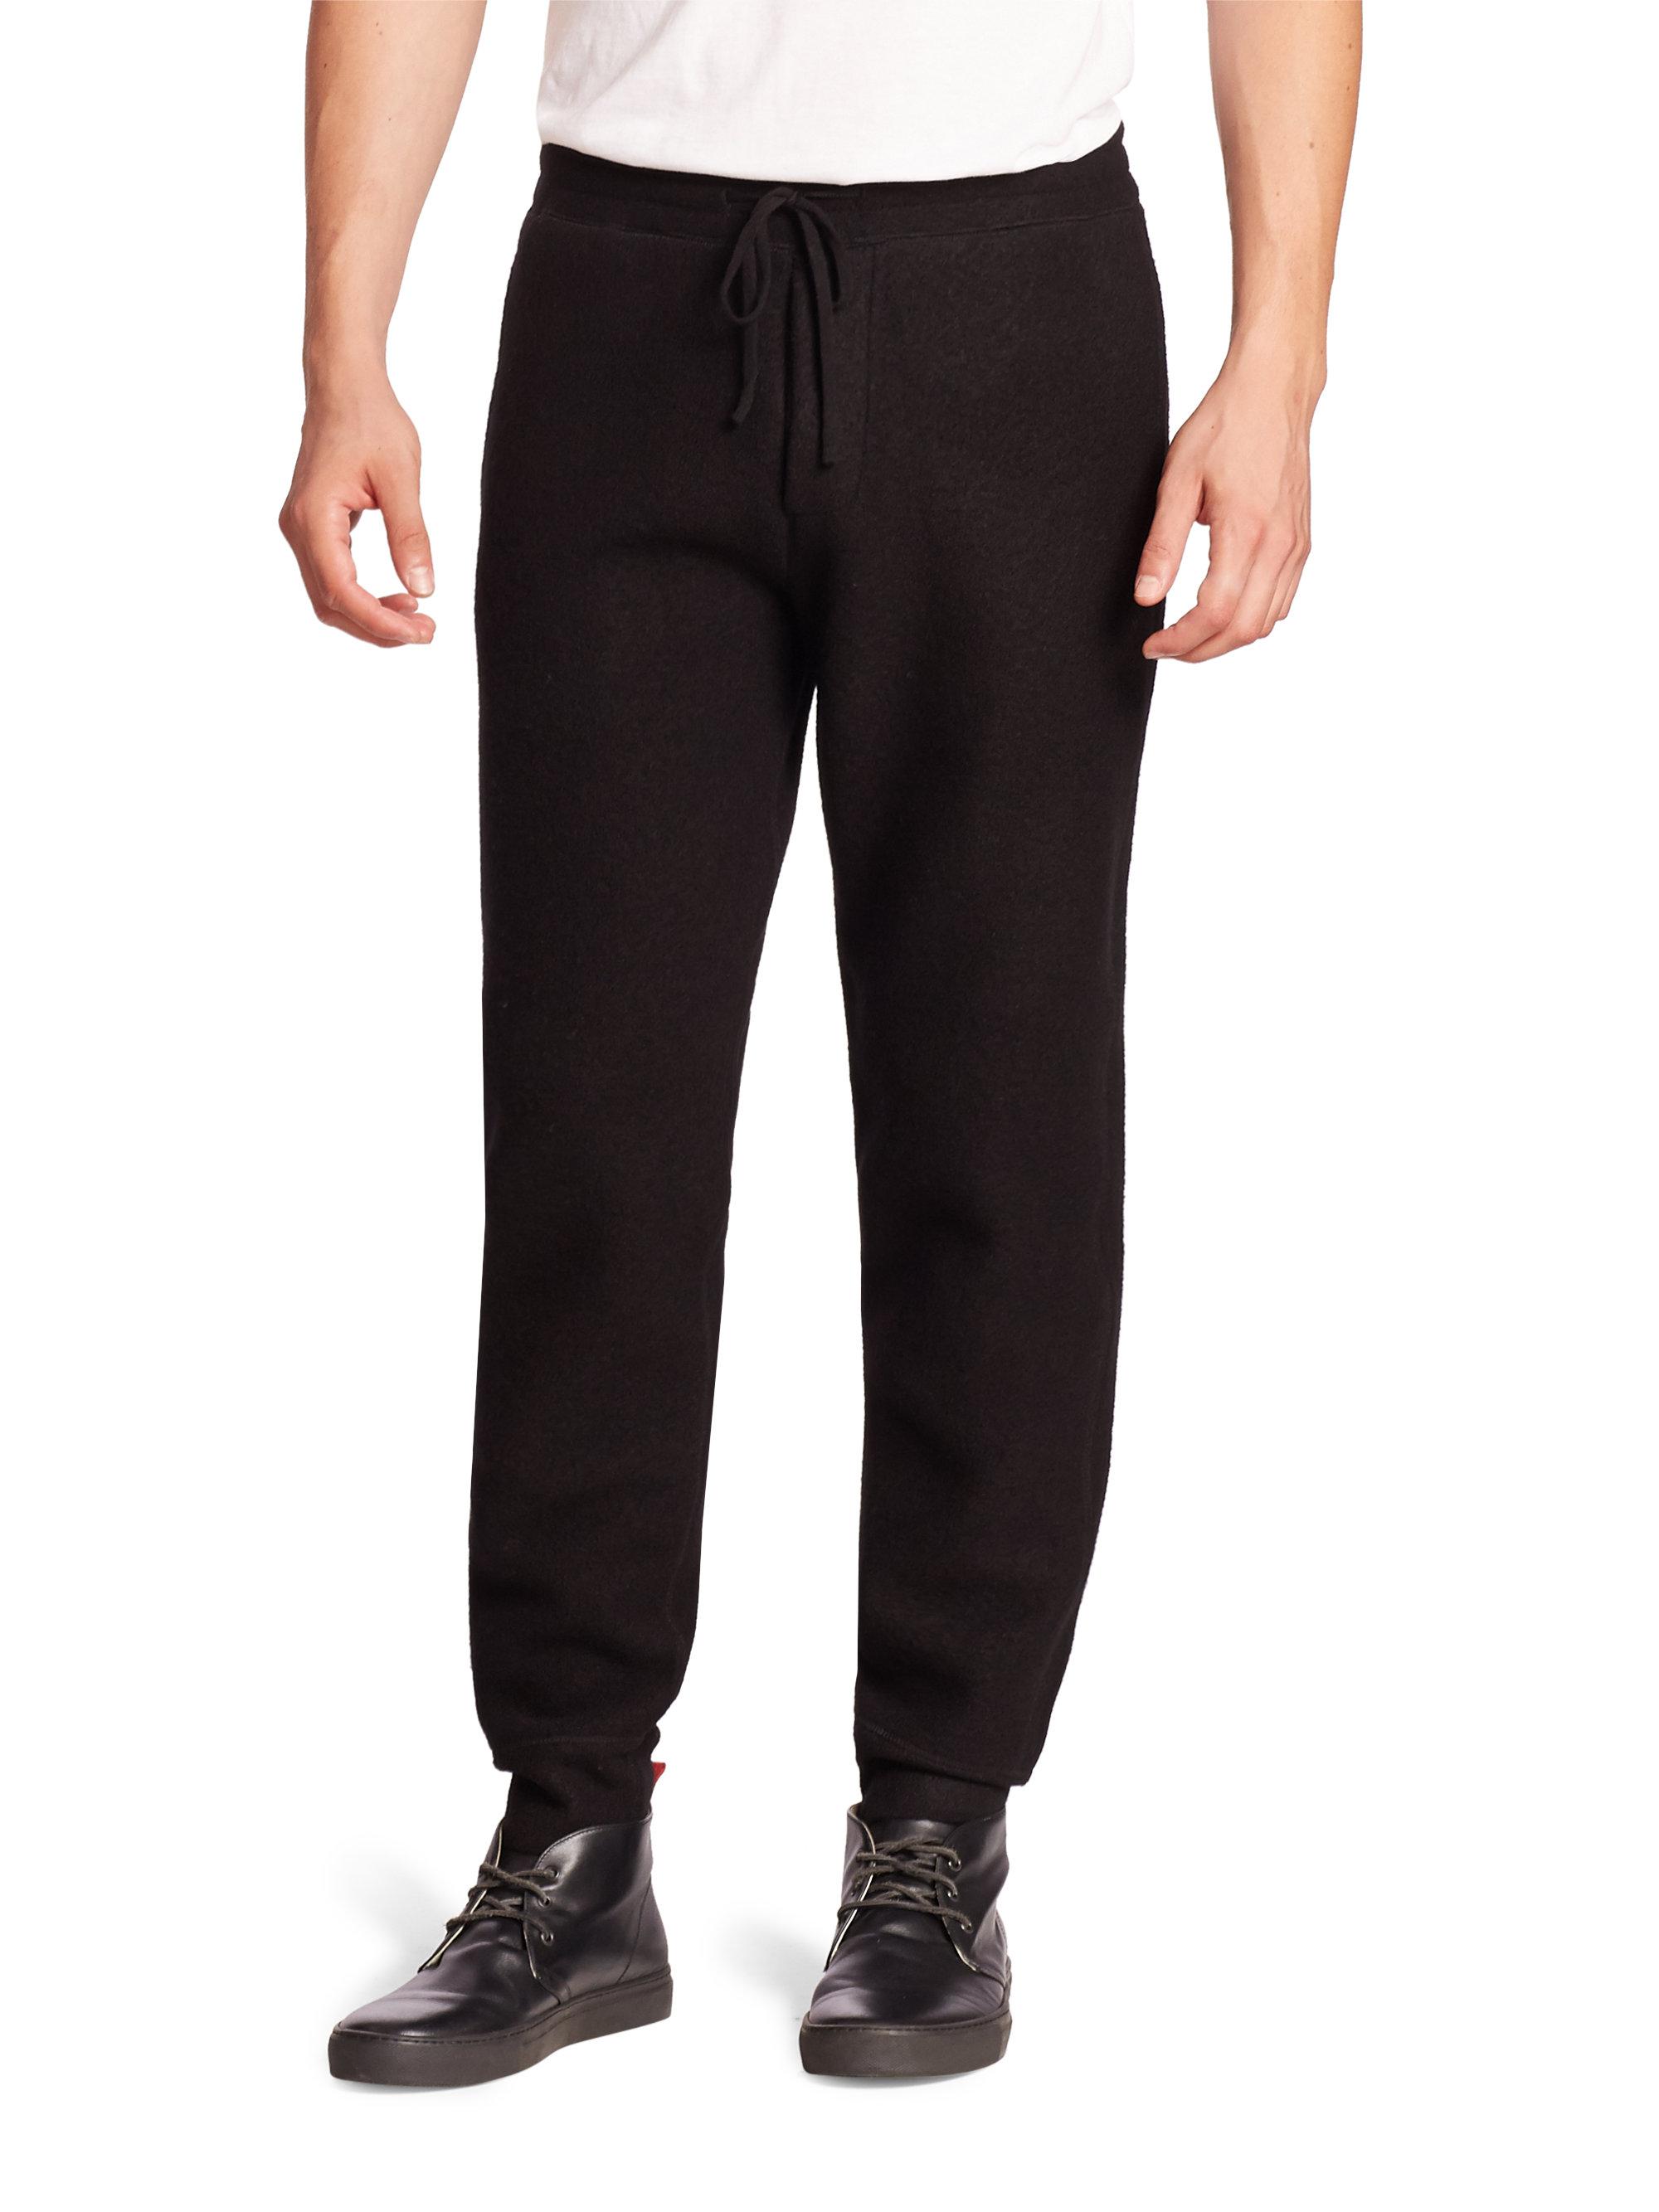 Lyst - Billy Reid Boiled Wool Track Pants in Black for Men